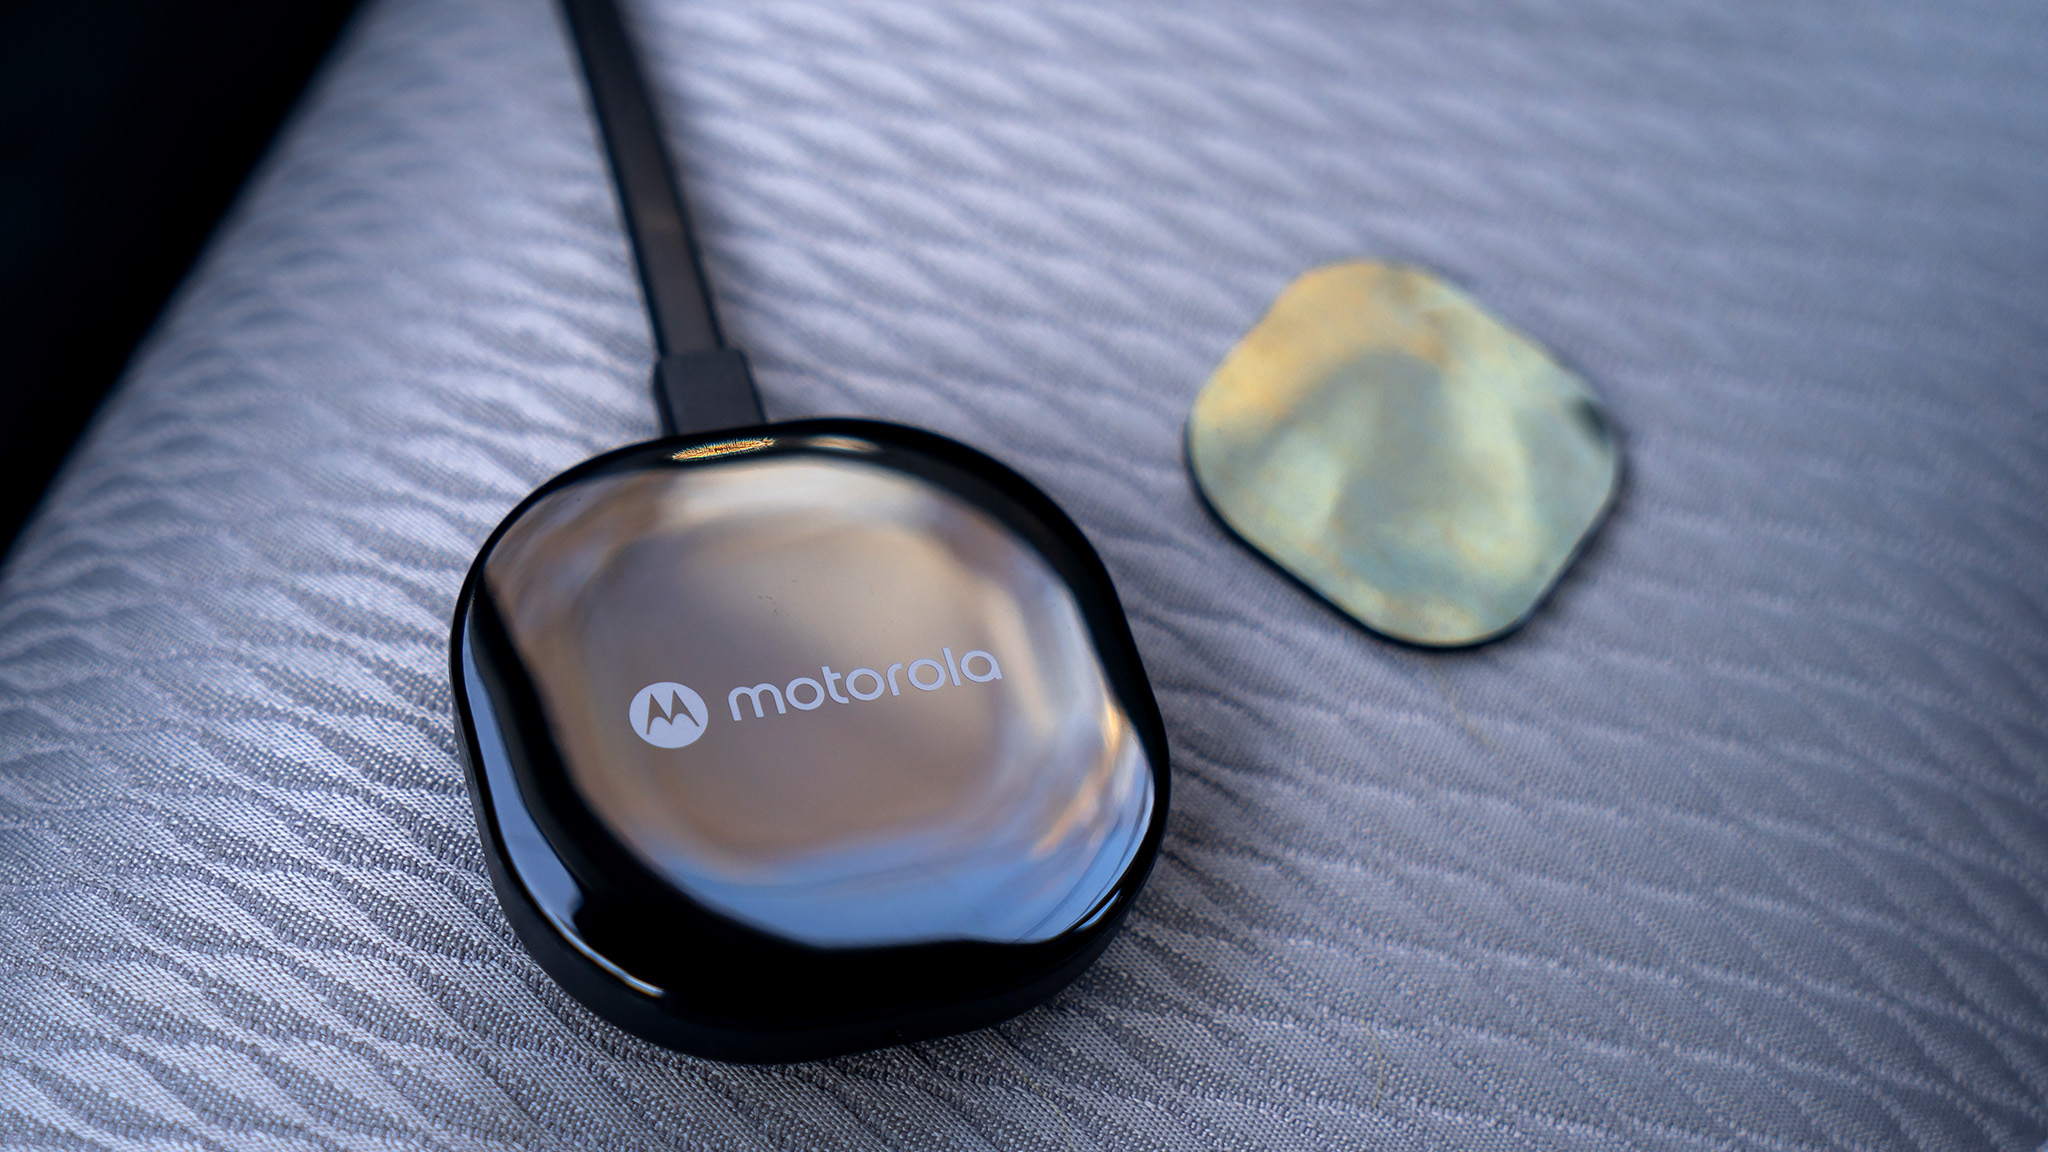 Motorola MA1 with adhesive pad.